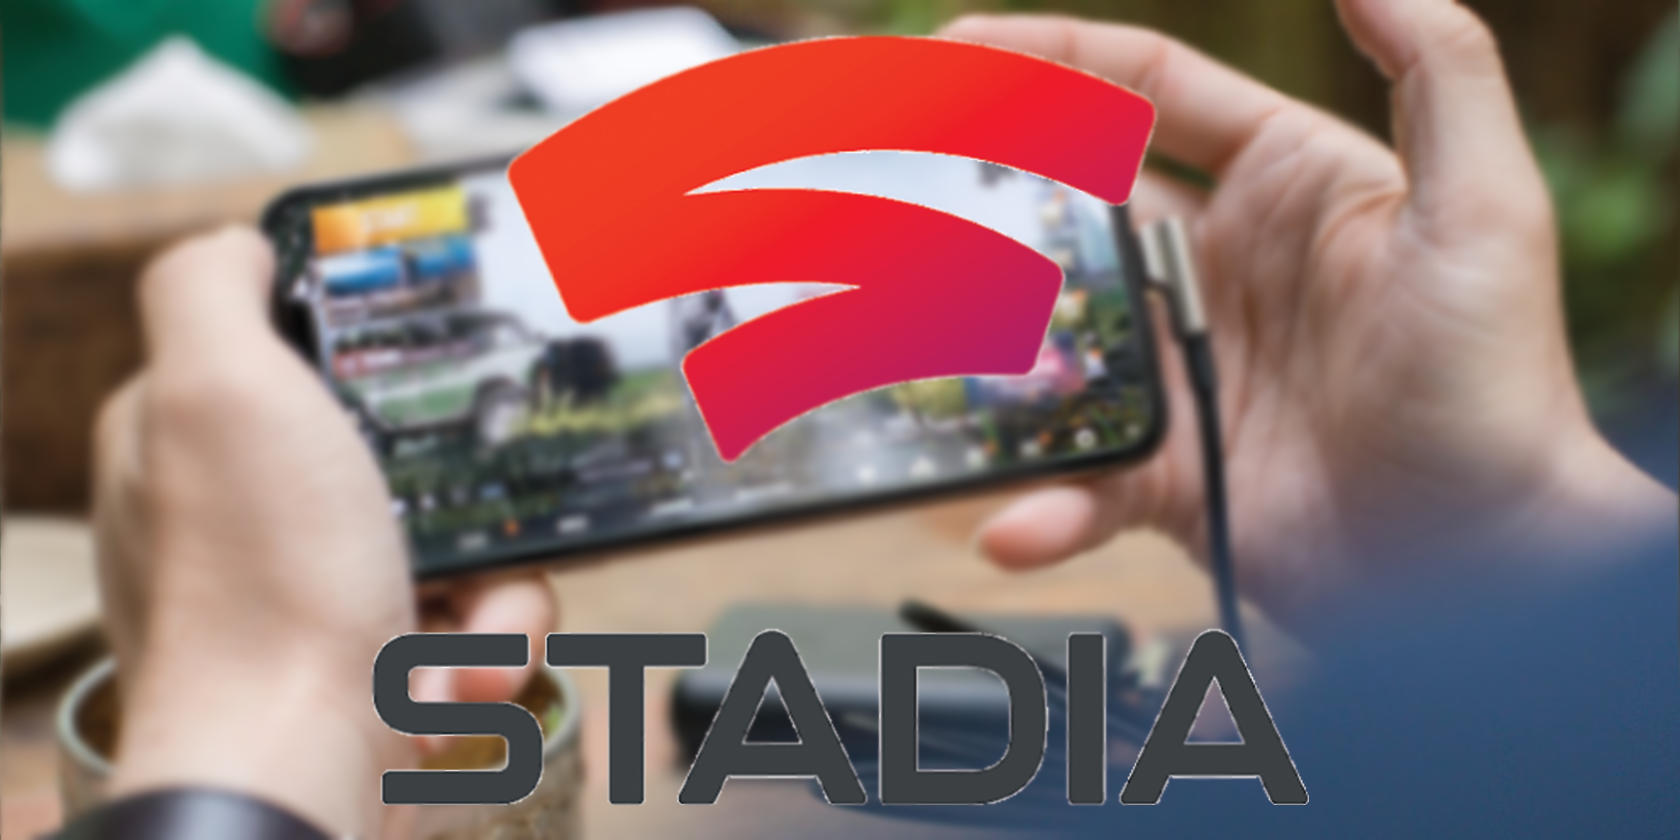 google stadia logo with iphone